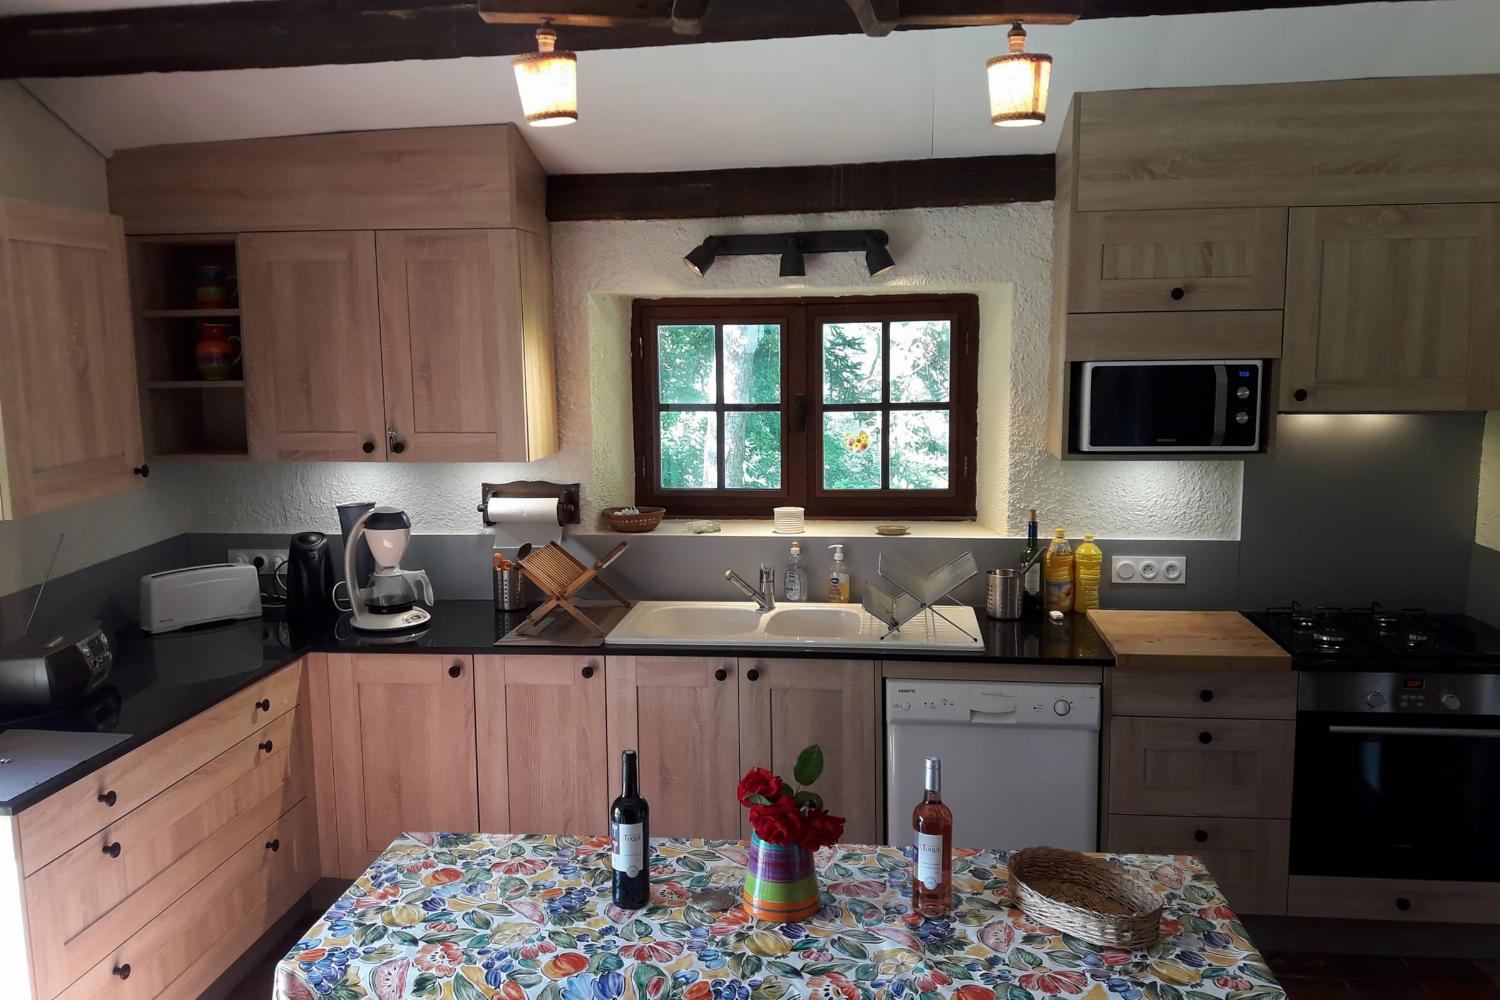 Kitchen | Rental accommodation in Dordogne